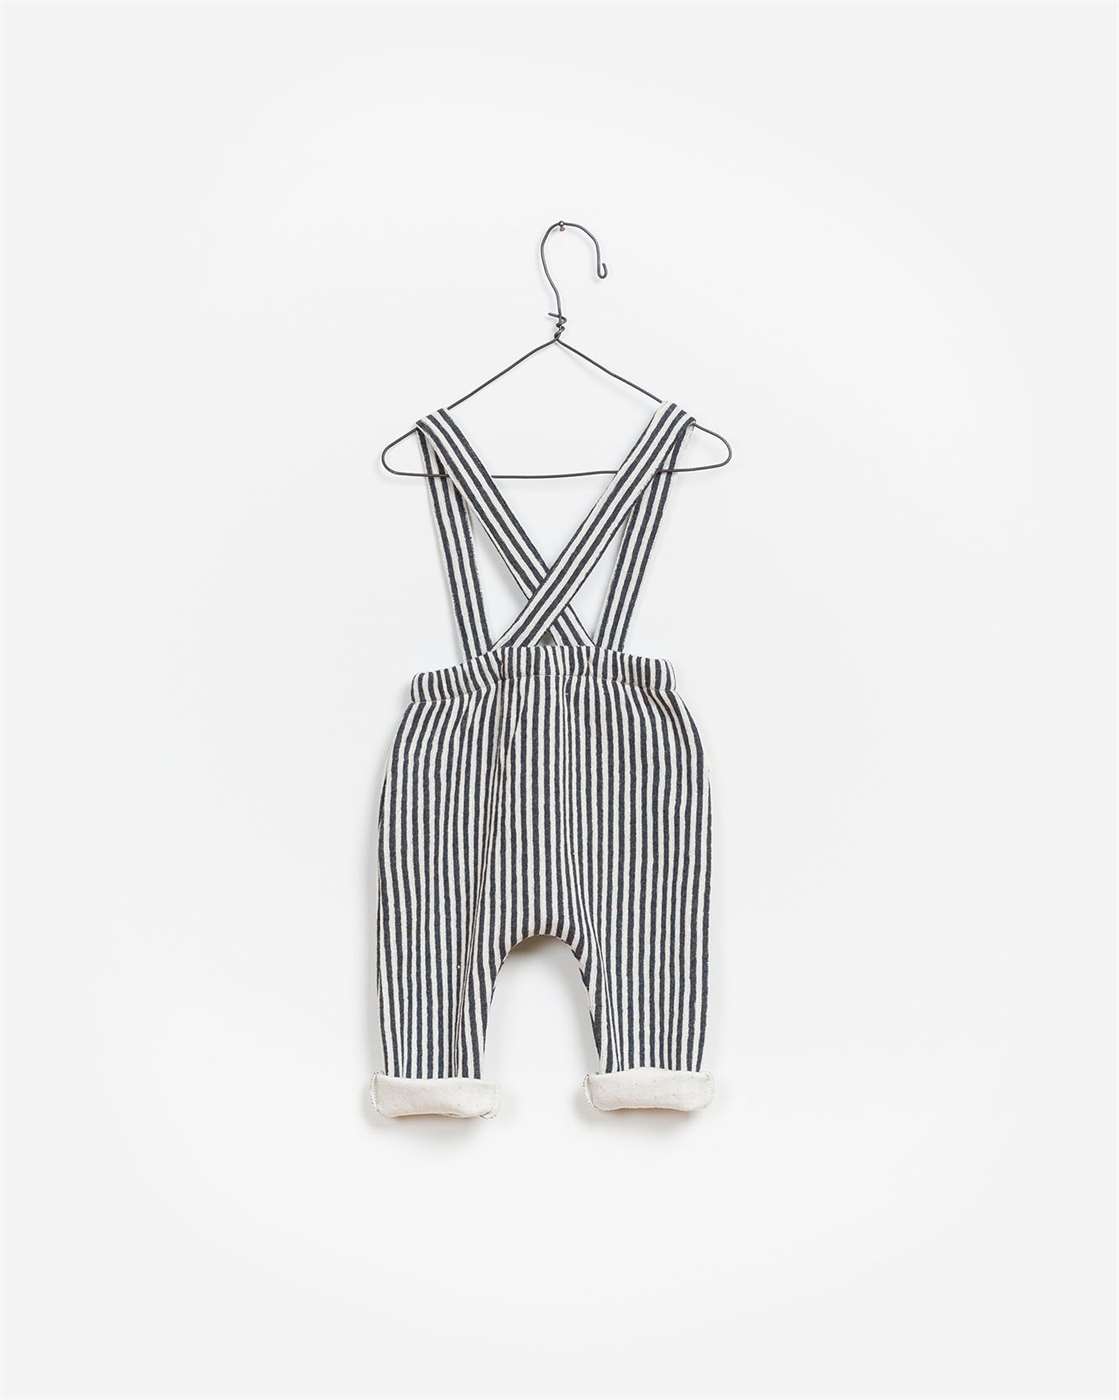 BeeBoo|BeeBoo PlayUp vêtements bébé baby clothes salopette overall rayures stripes coton bio organic cotton gris grey 1